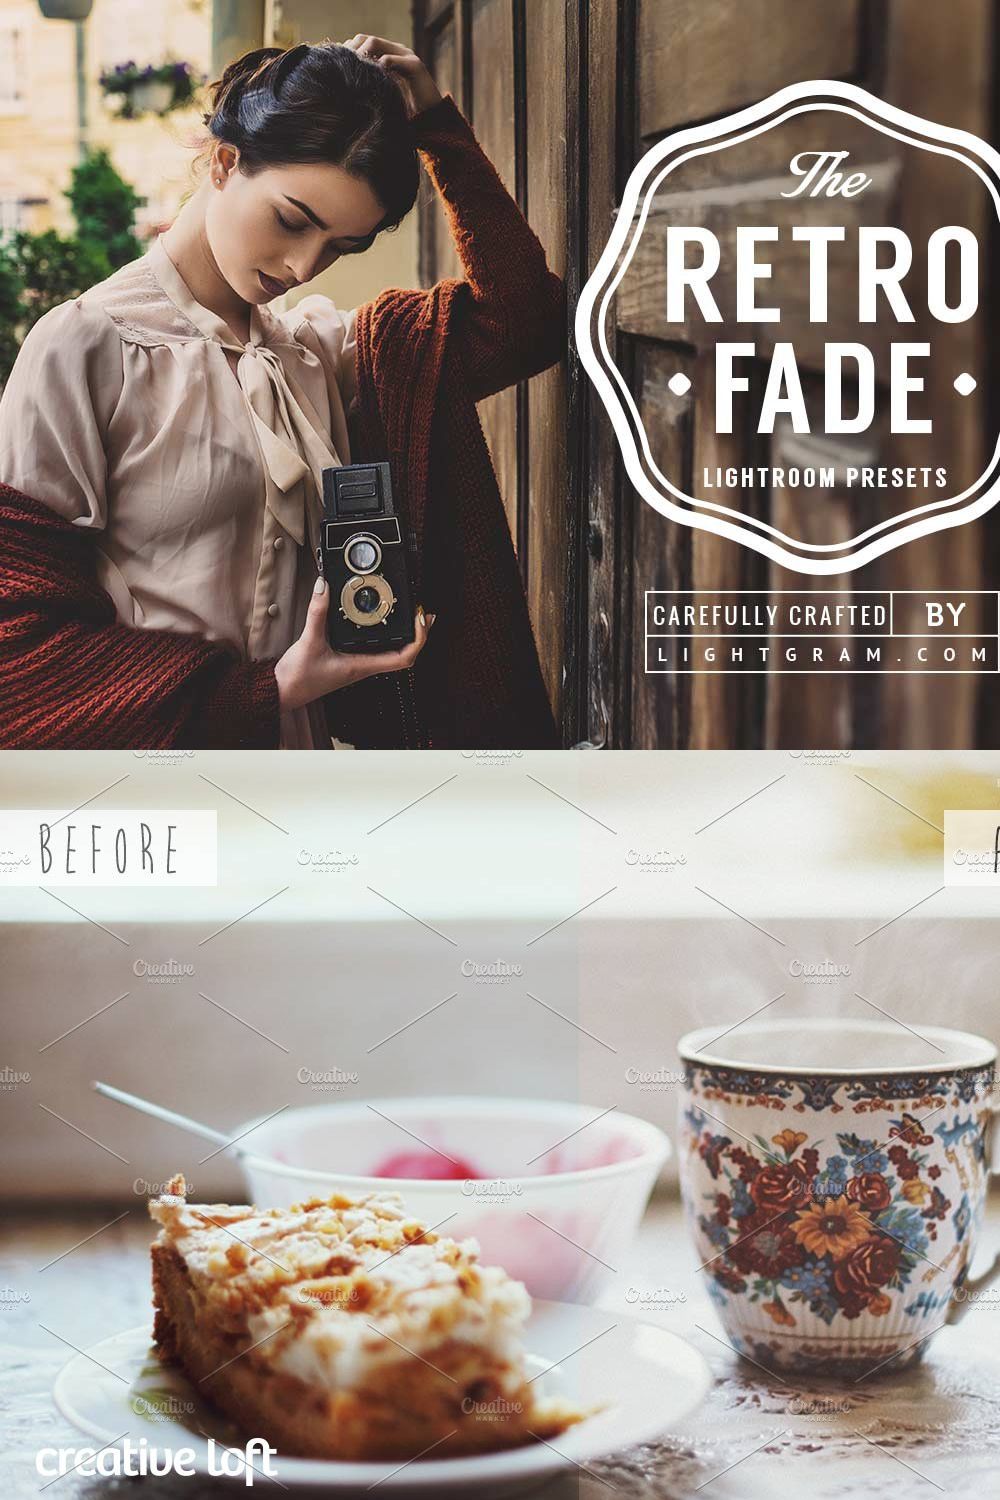 RETROFADE - Lightroom presets pinterest preview image.